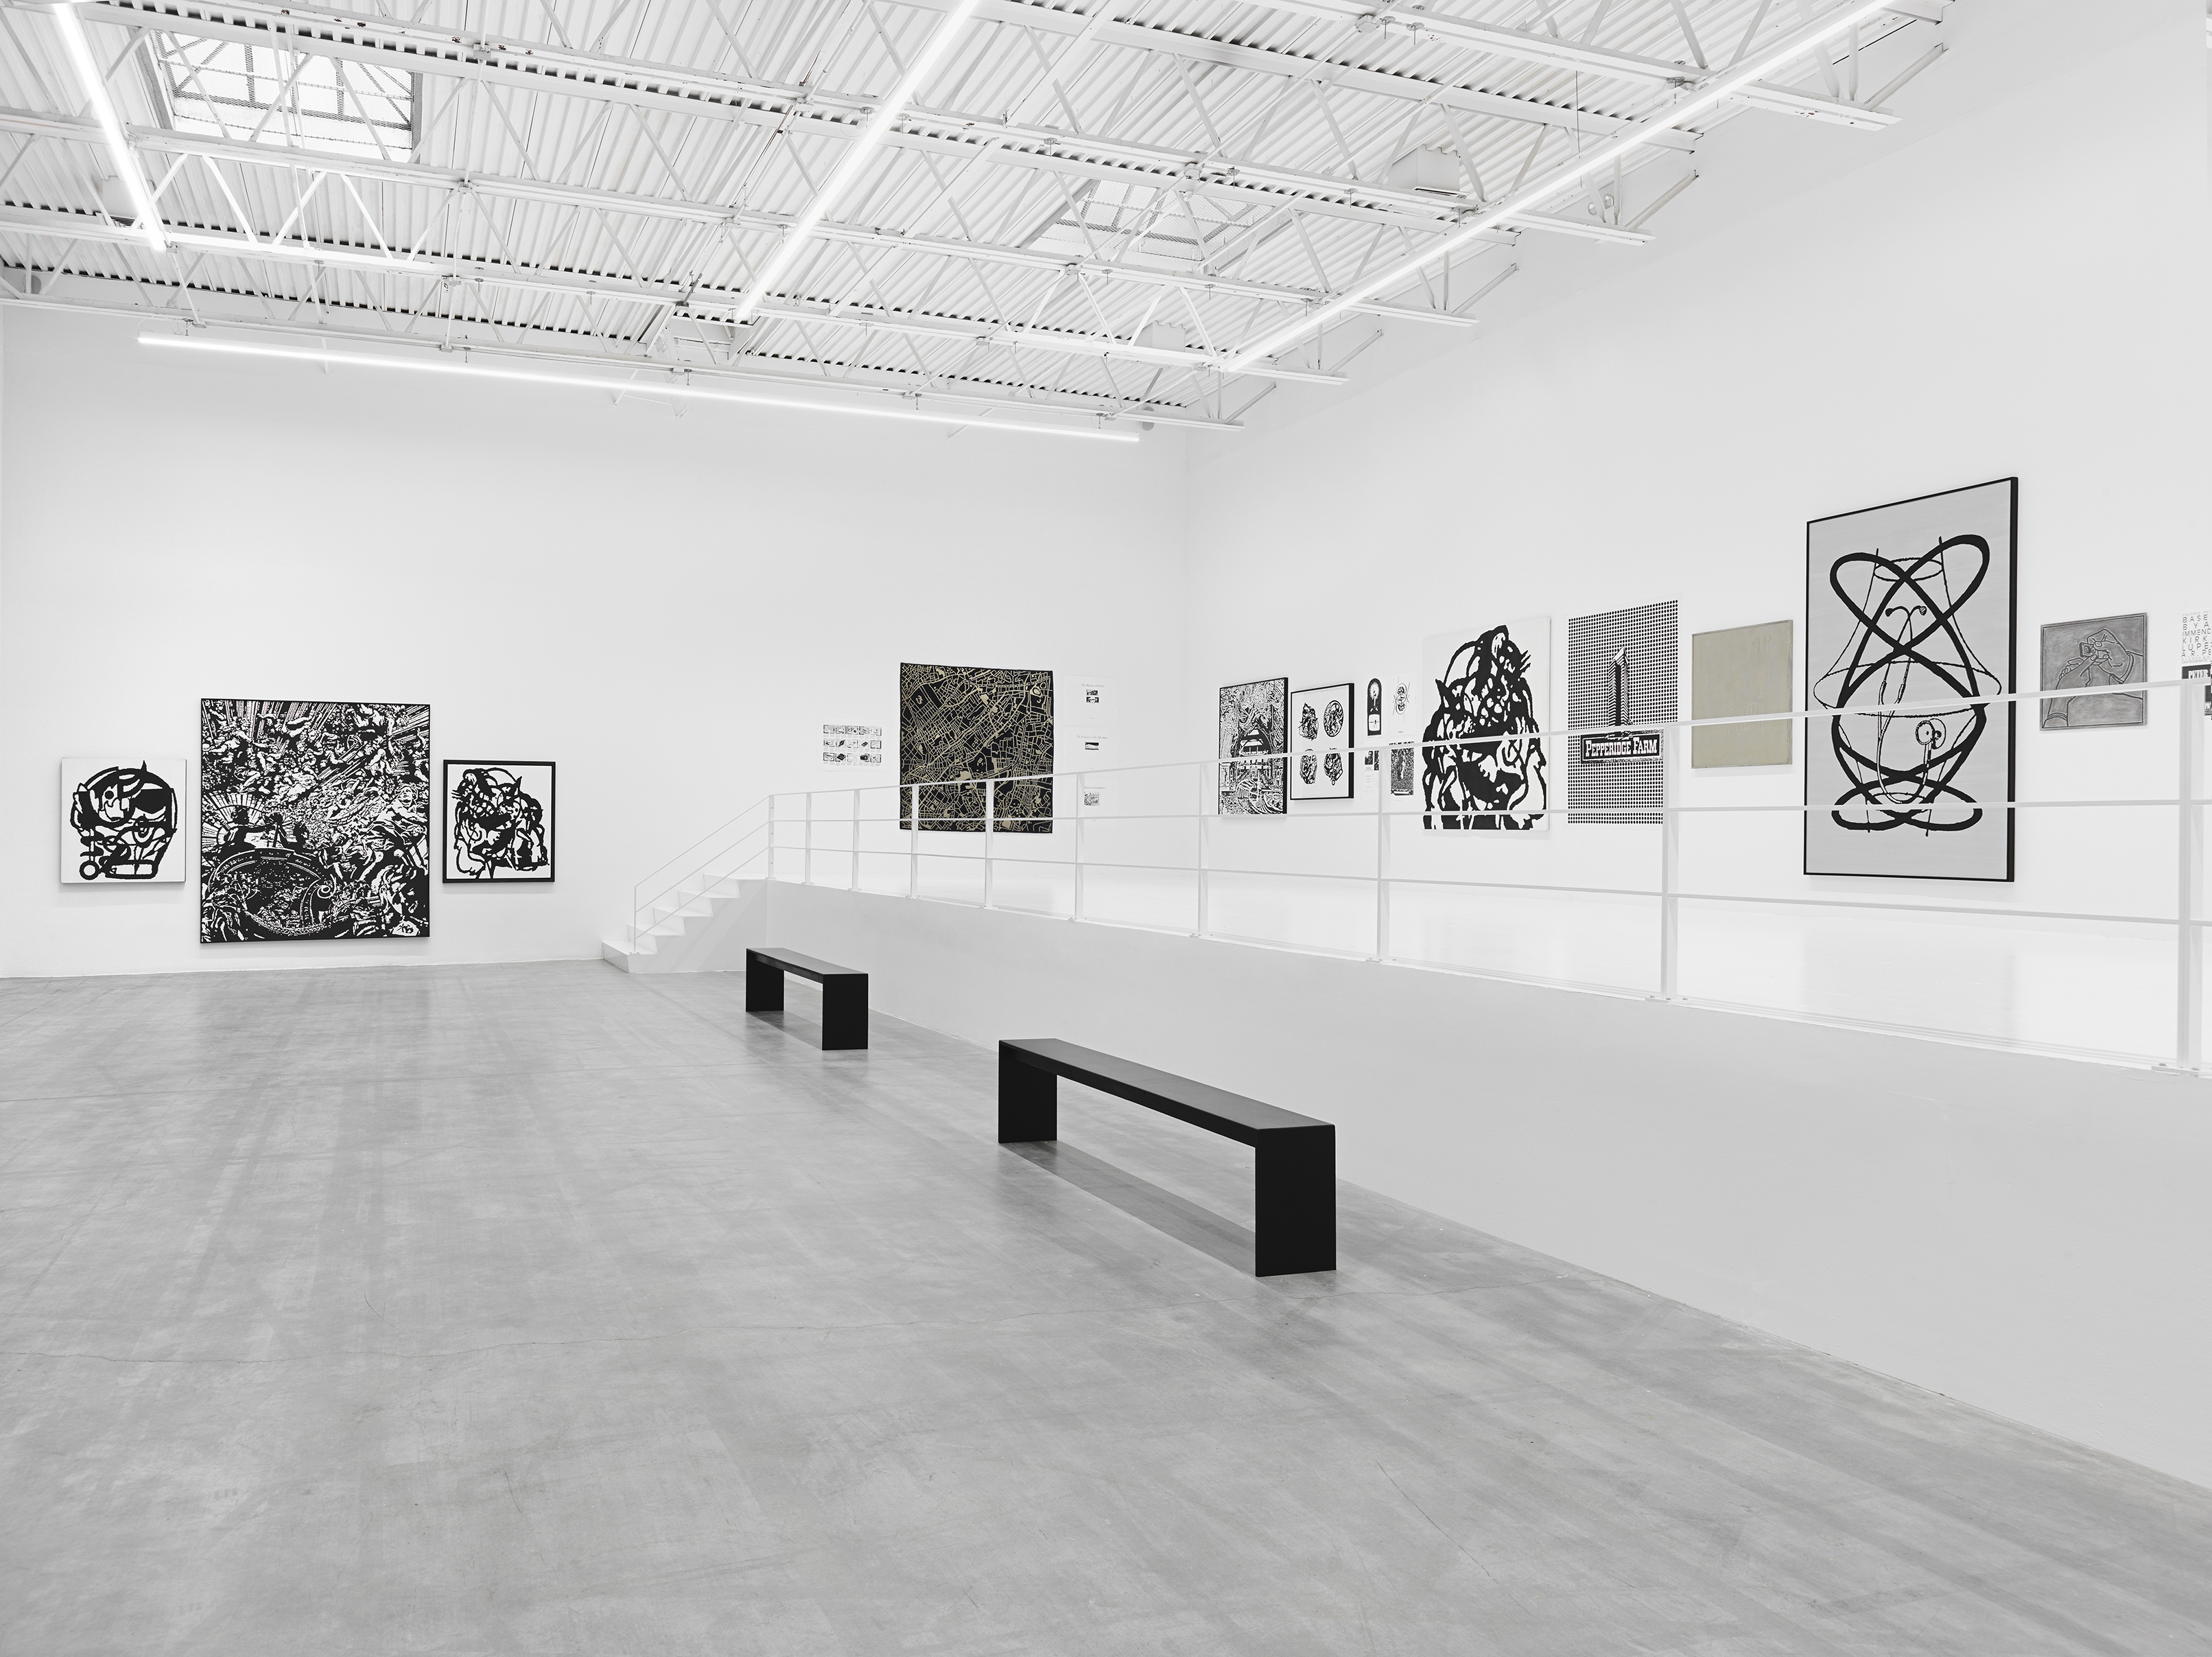 Installation view, Peter Nagy: Entertainment Erases History, Jeffrey Deitch, New York, NY, 2020